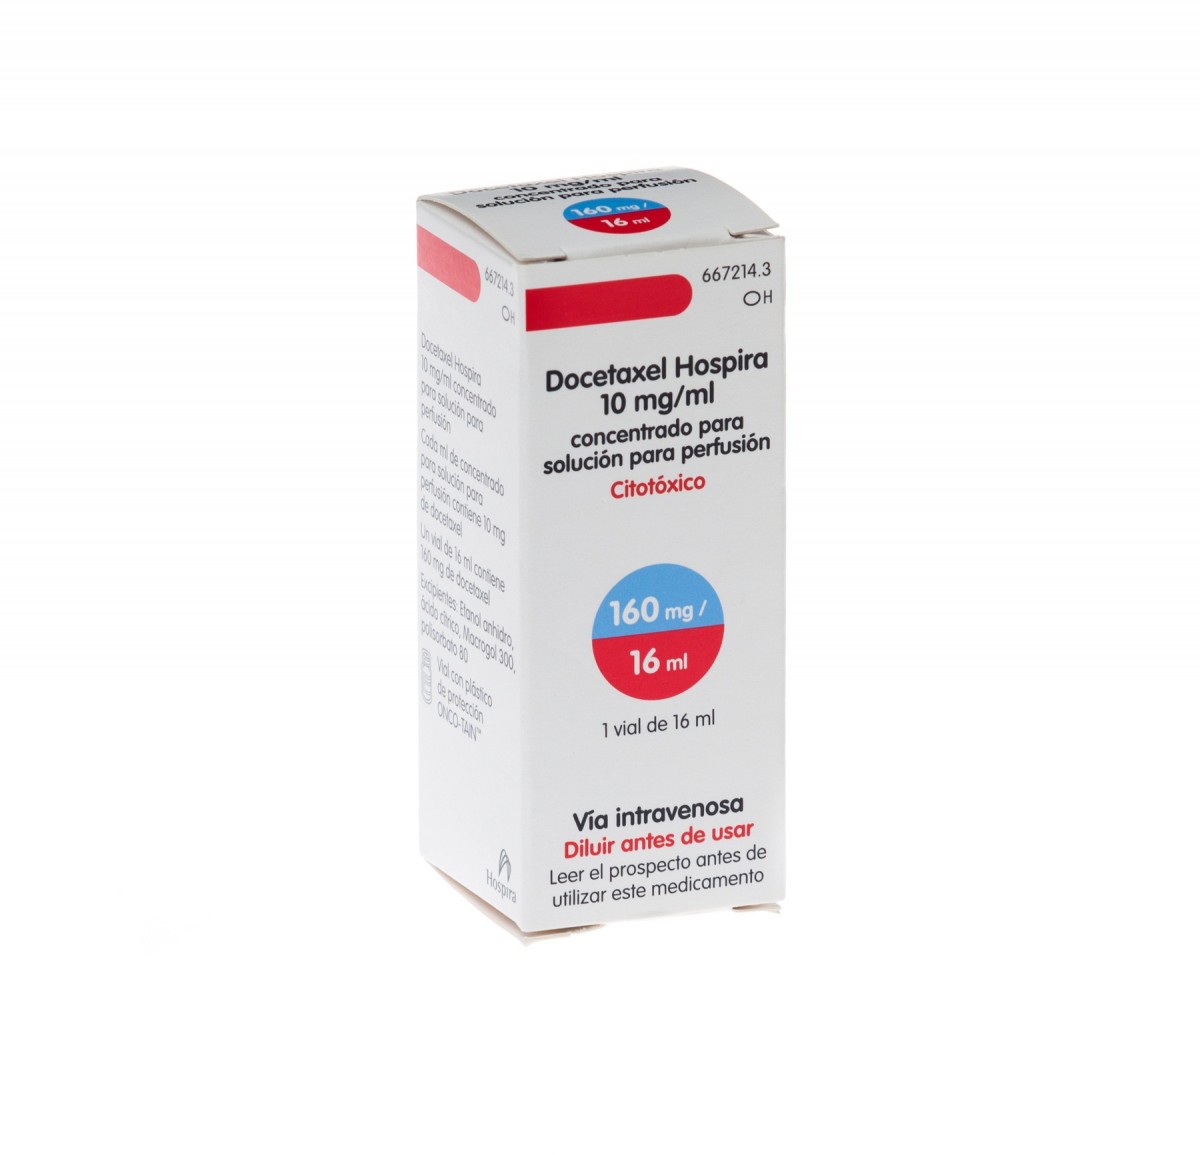 DOCETAXEL HOSPIRA 10 mg/ml CONCENTRADO PARA SOLUCION PARA PERFUSION, 1 vial de 2 ml fotografía del envase.